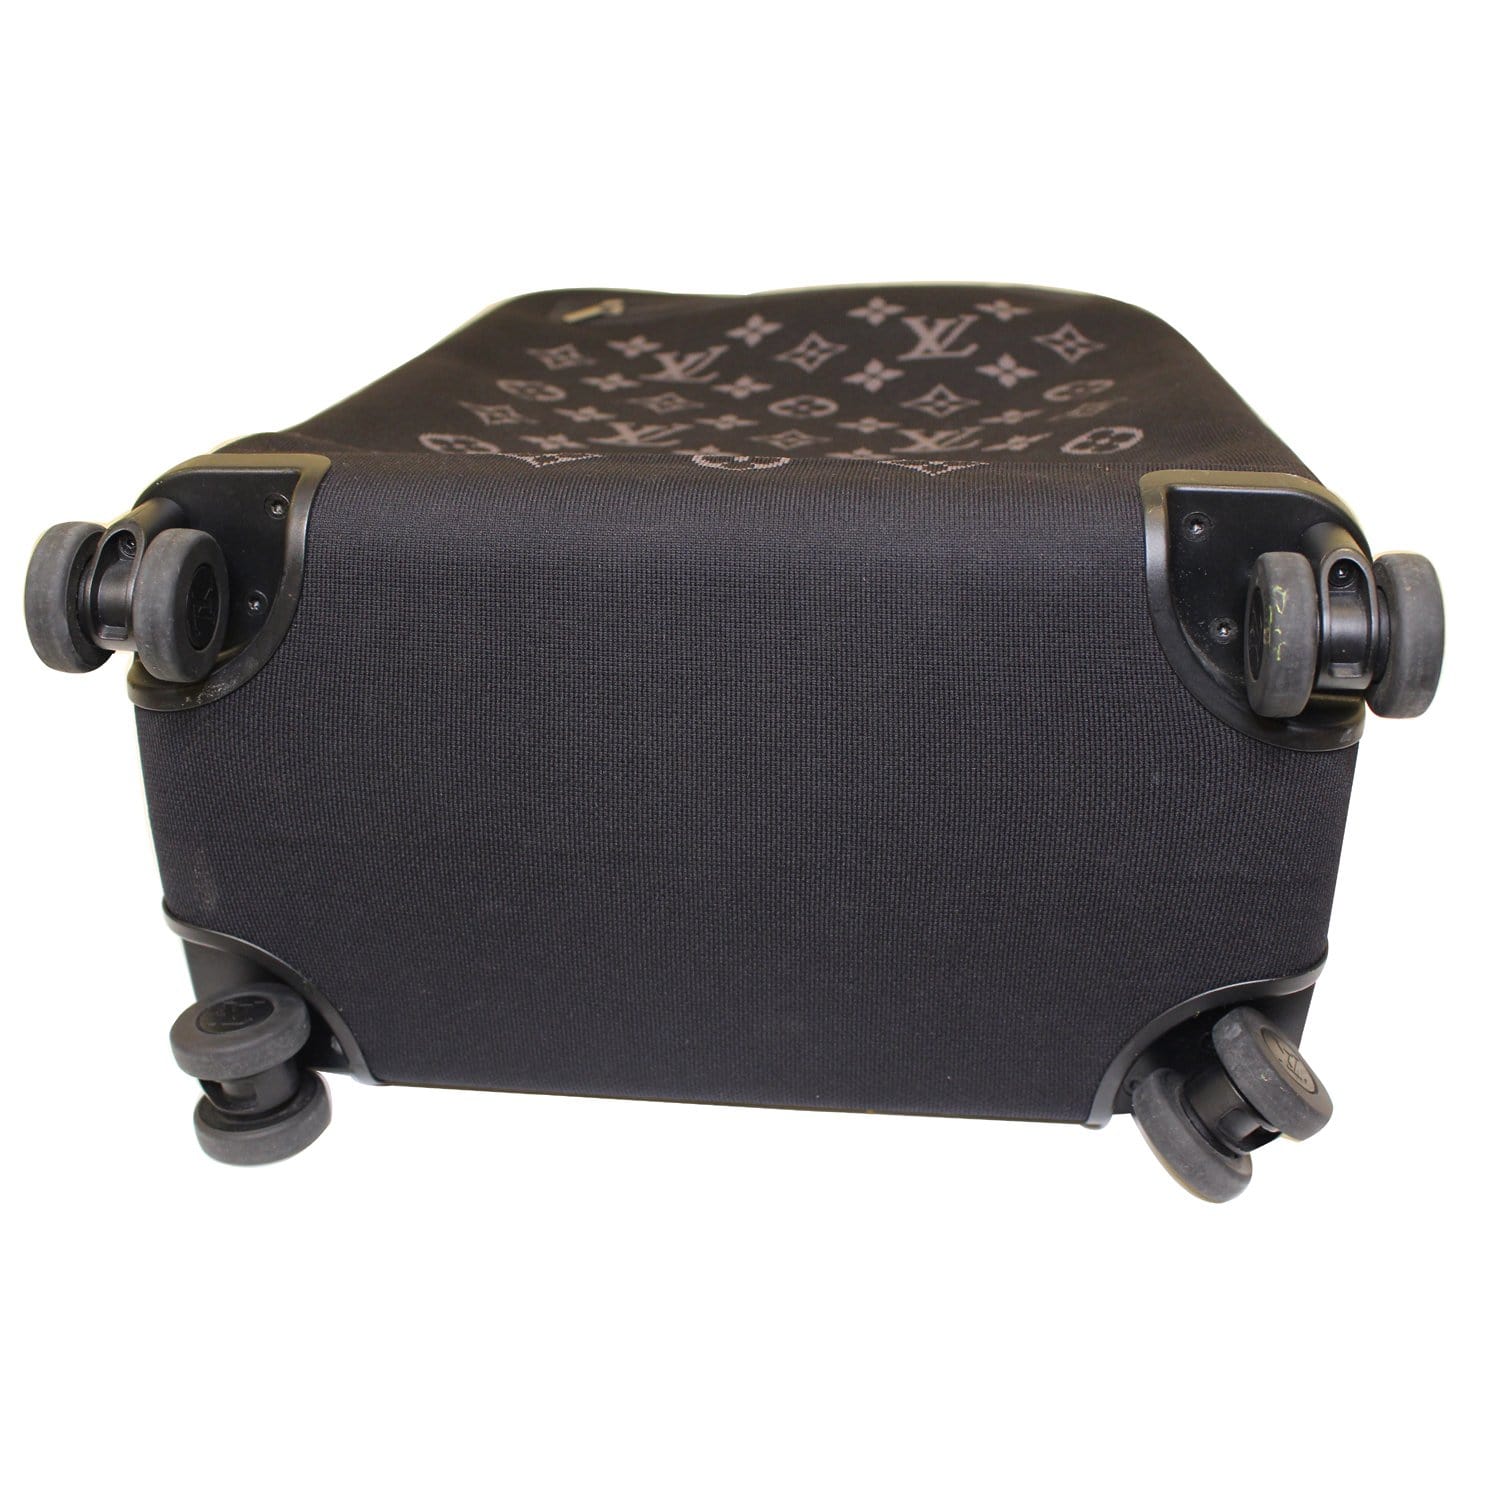 Louis Vuitton Horizon 55 - Lv Monogram Rolling Suitcase